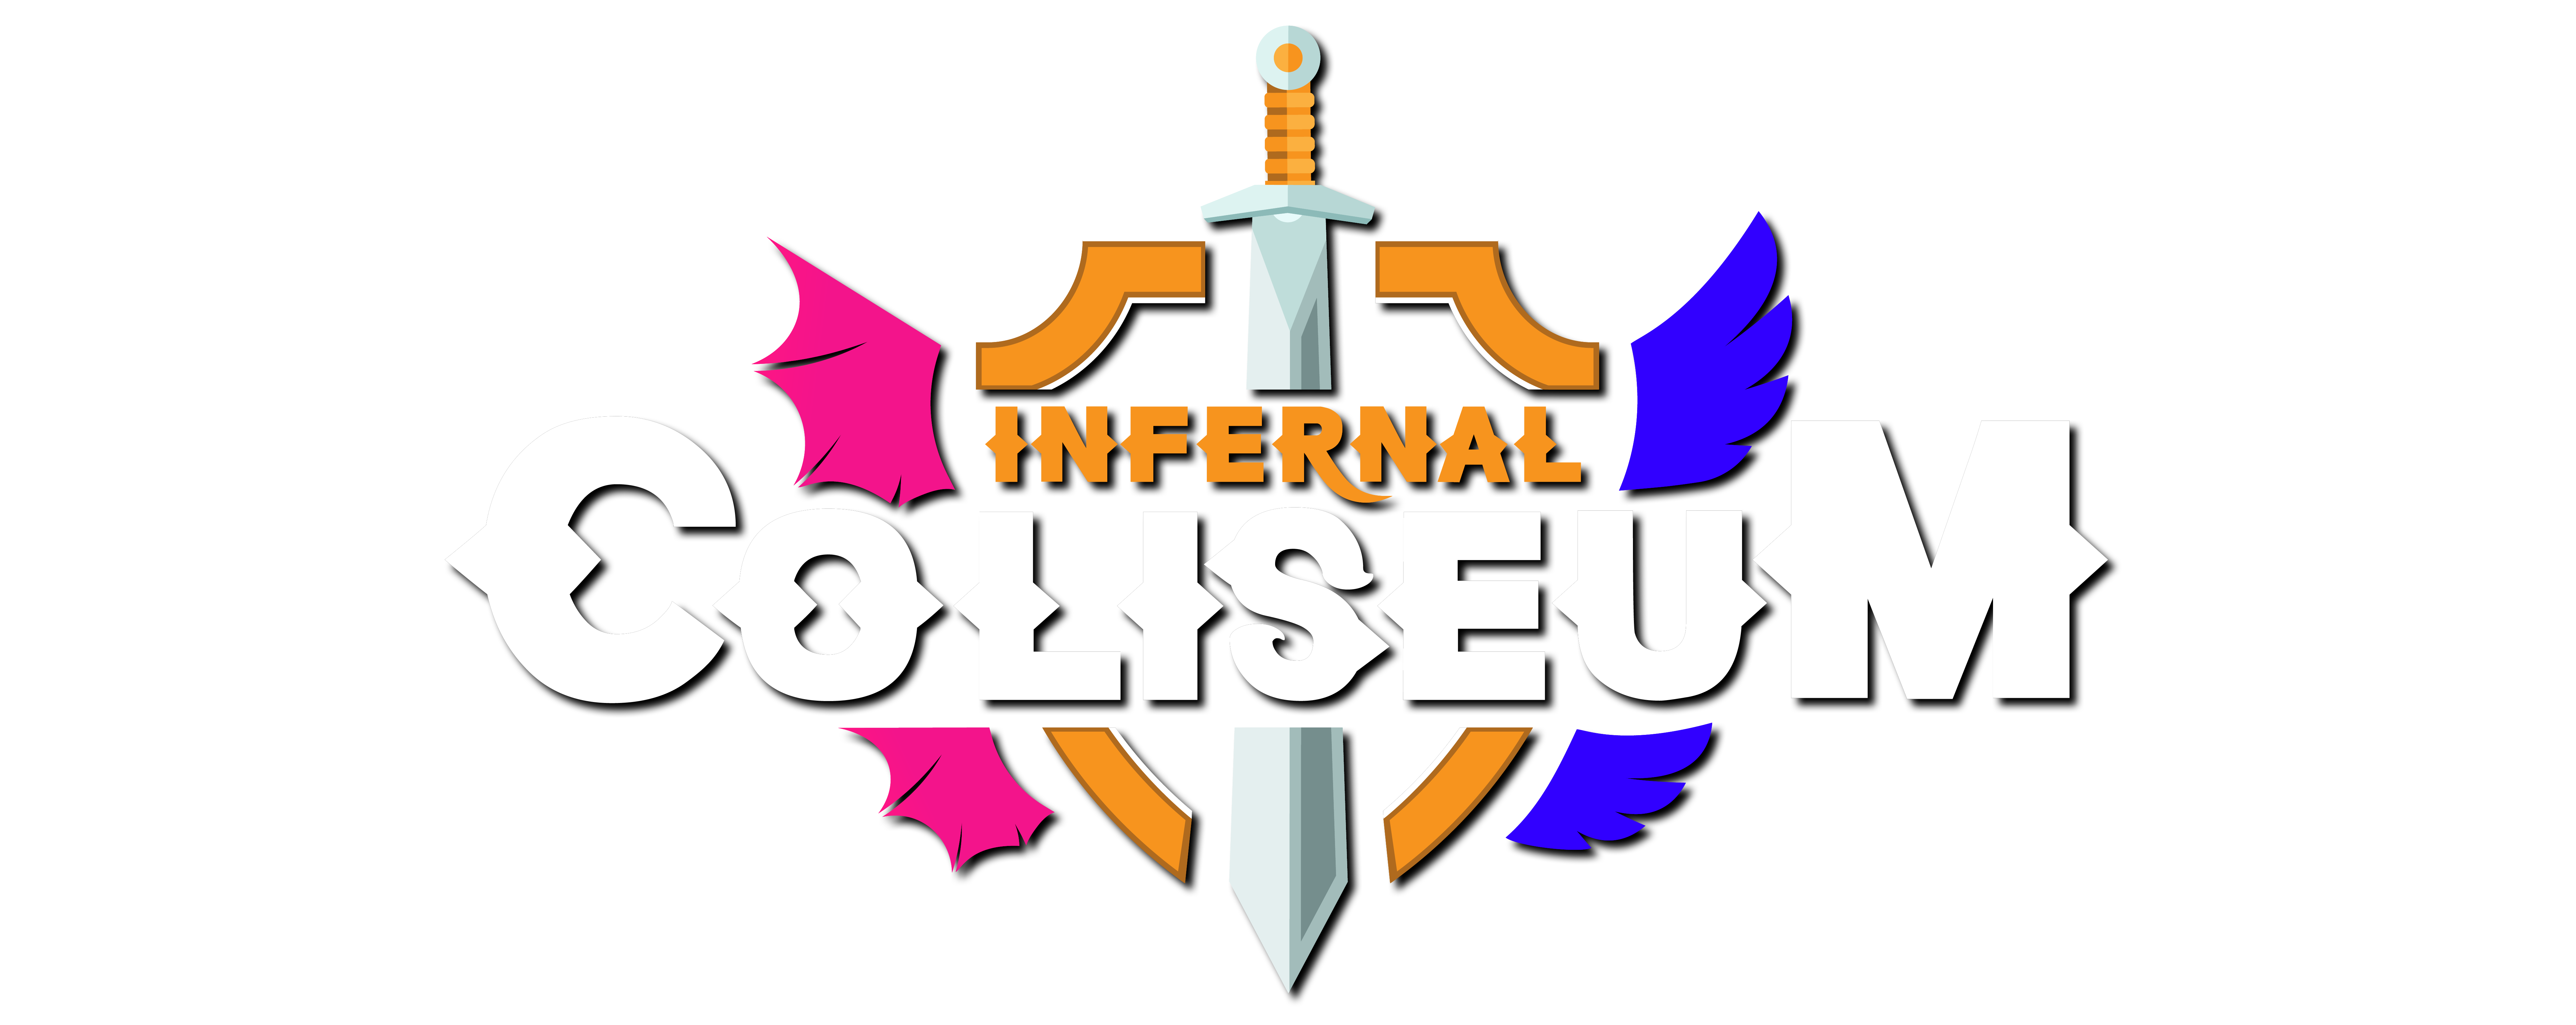 Infernal Coliseum store